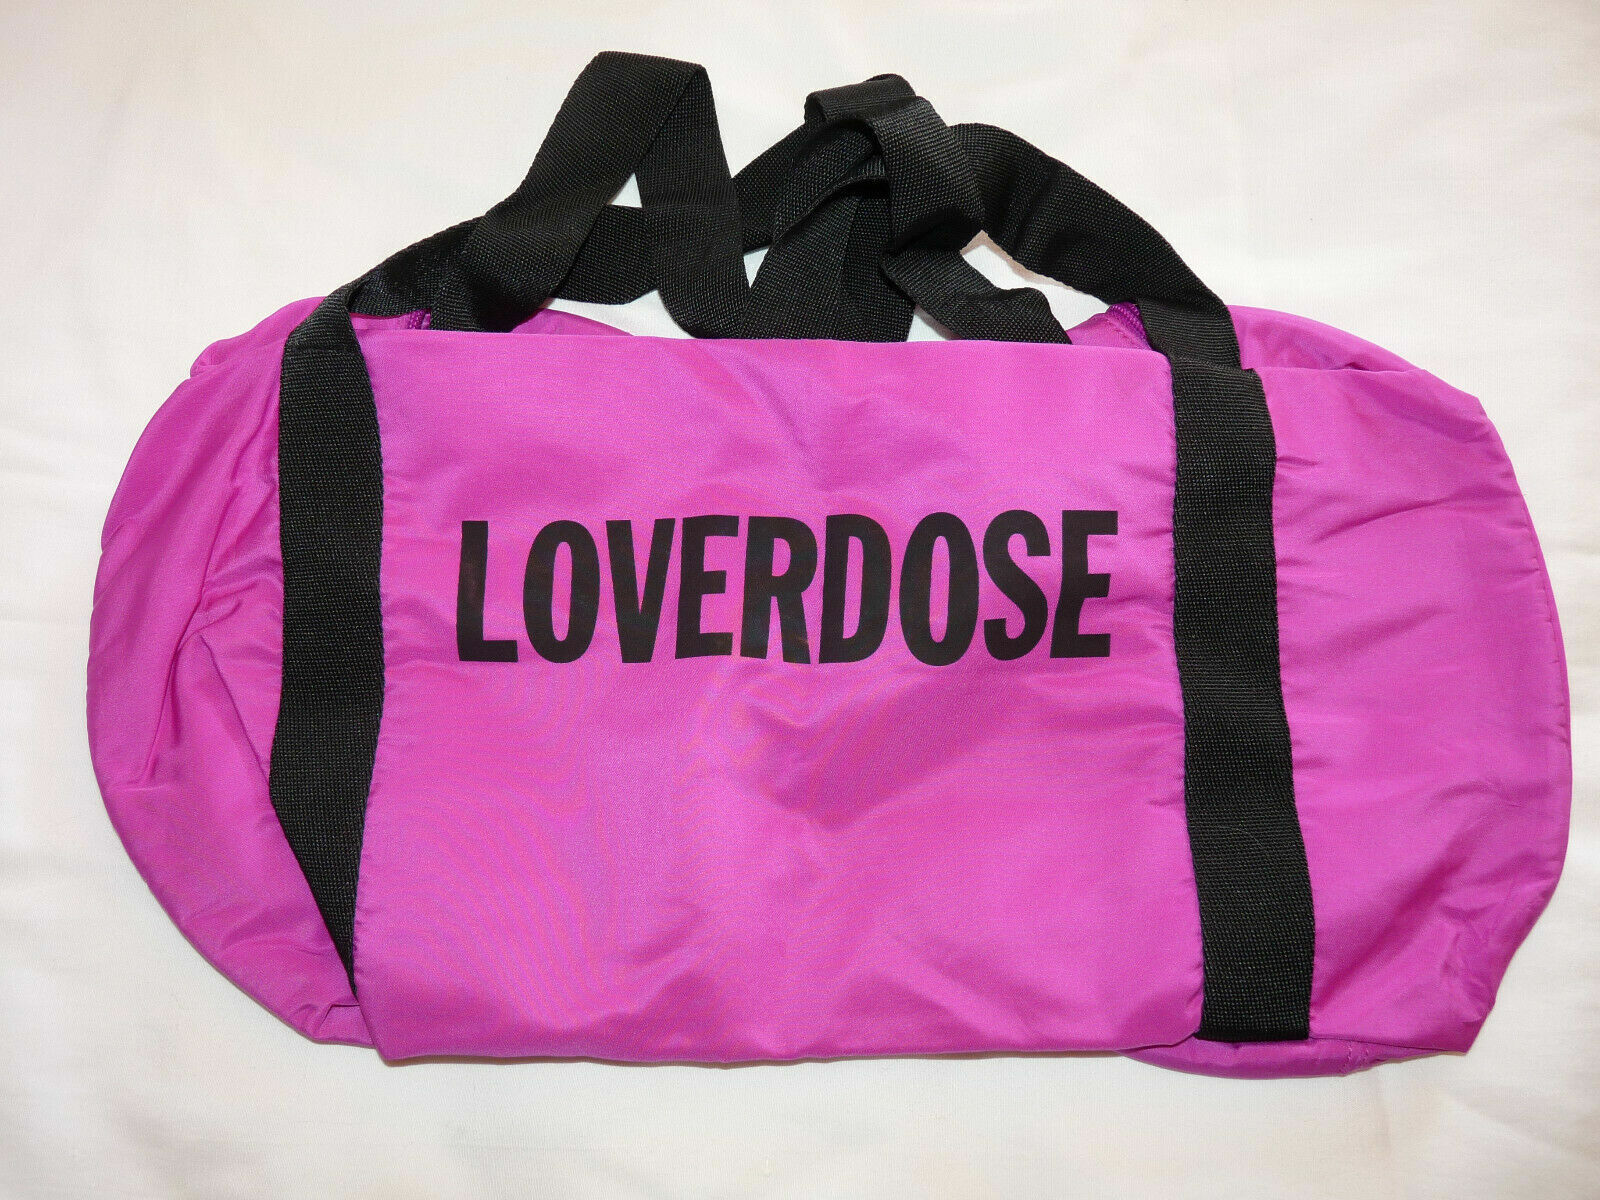 DIESEL Parfums Limited Edition LOVERDOSE Sports Travel Weekend Bag New